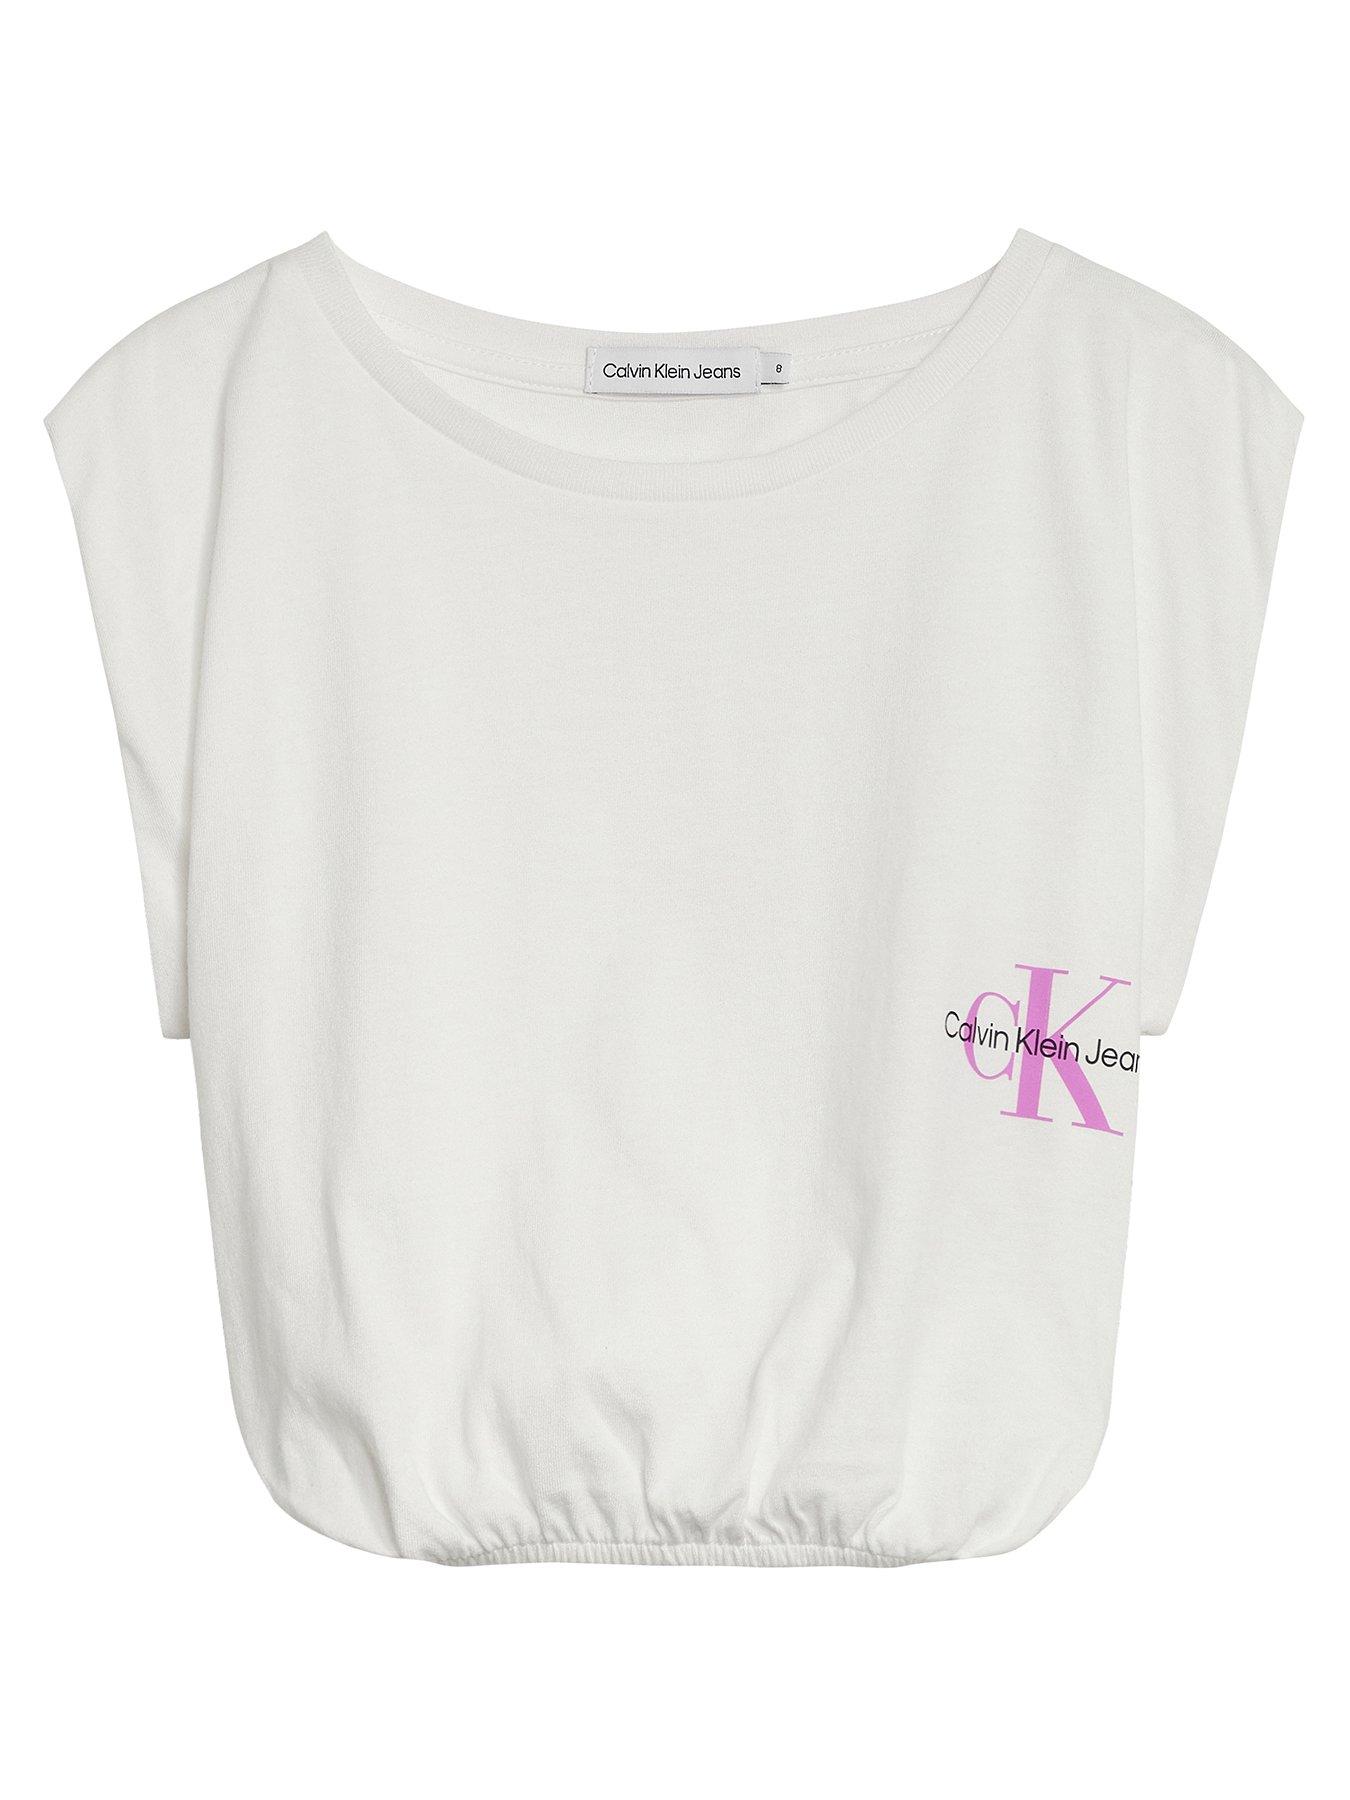 Kids Girls Monogram Off Placed Cap T-shirt - White